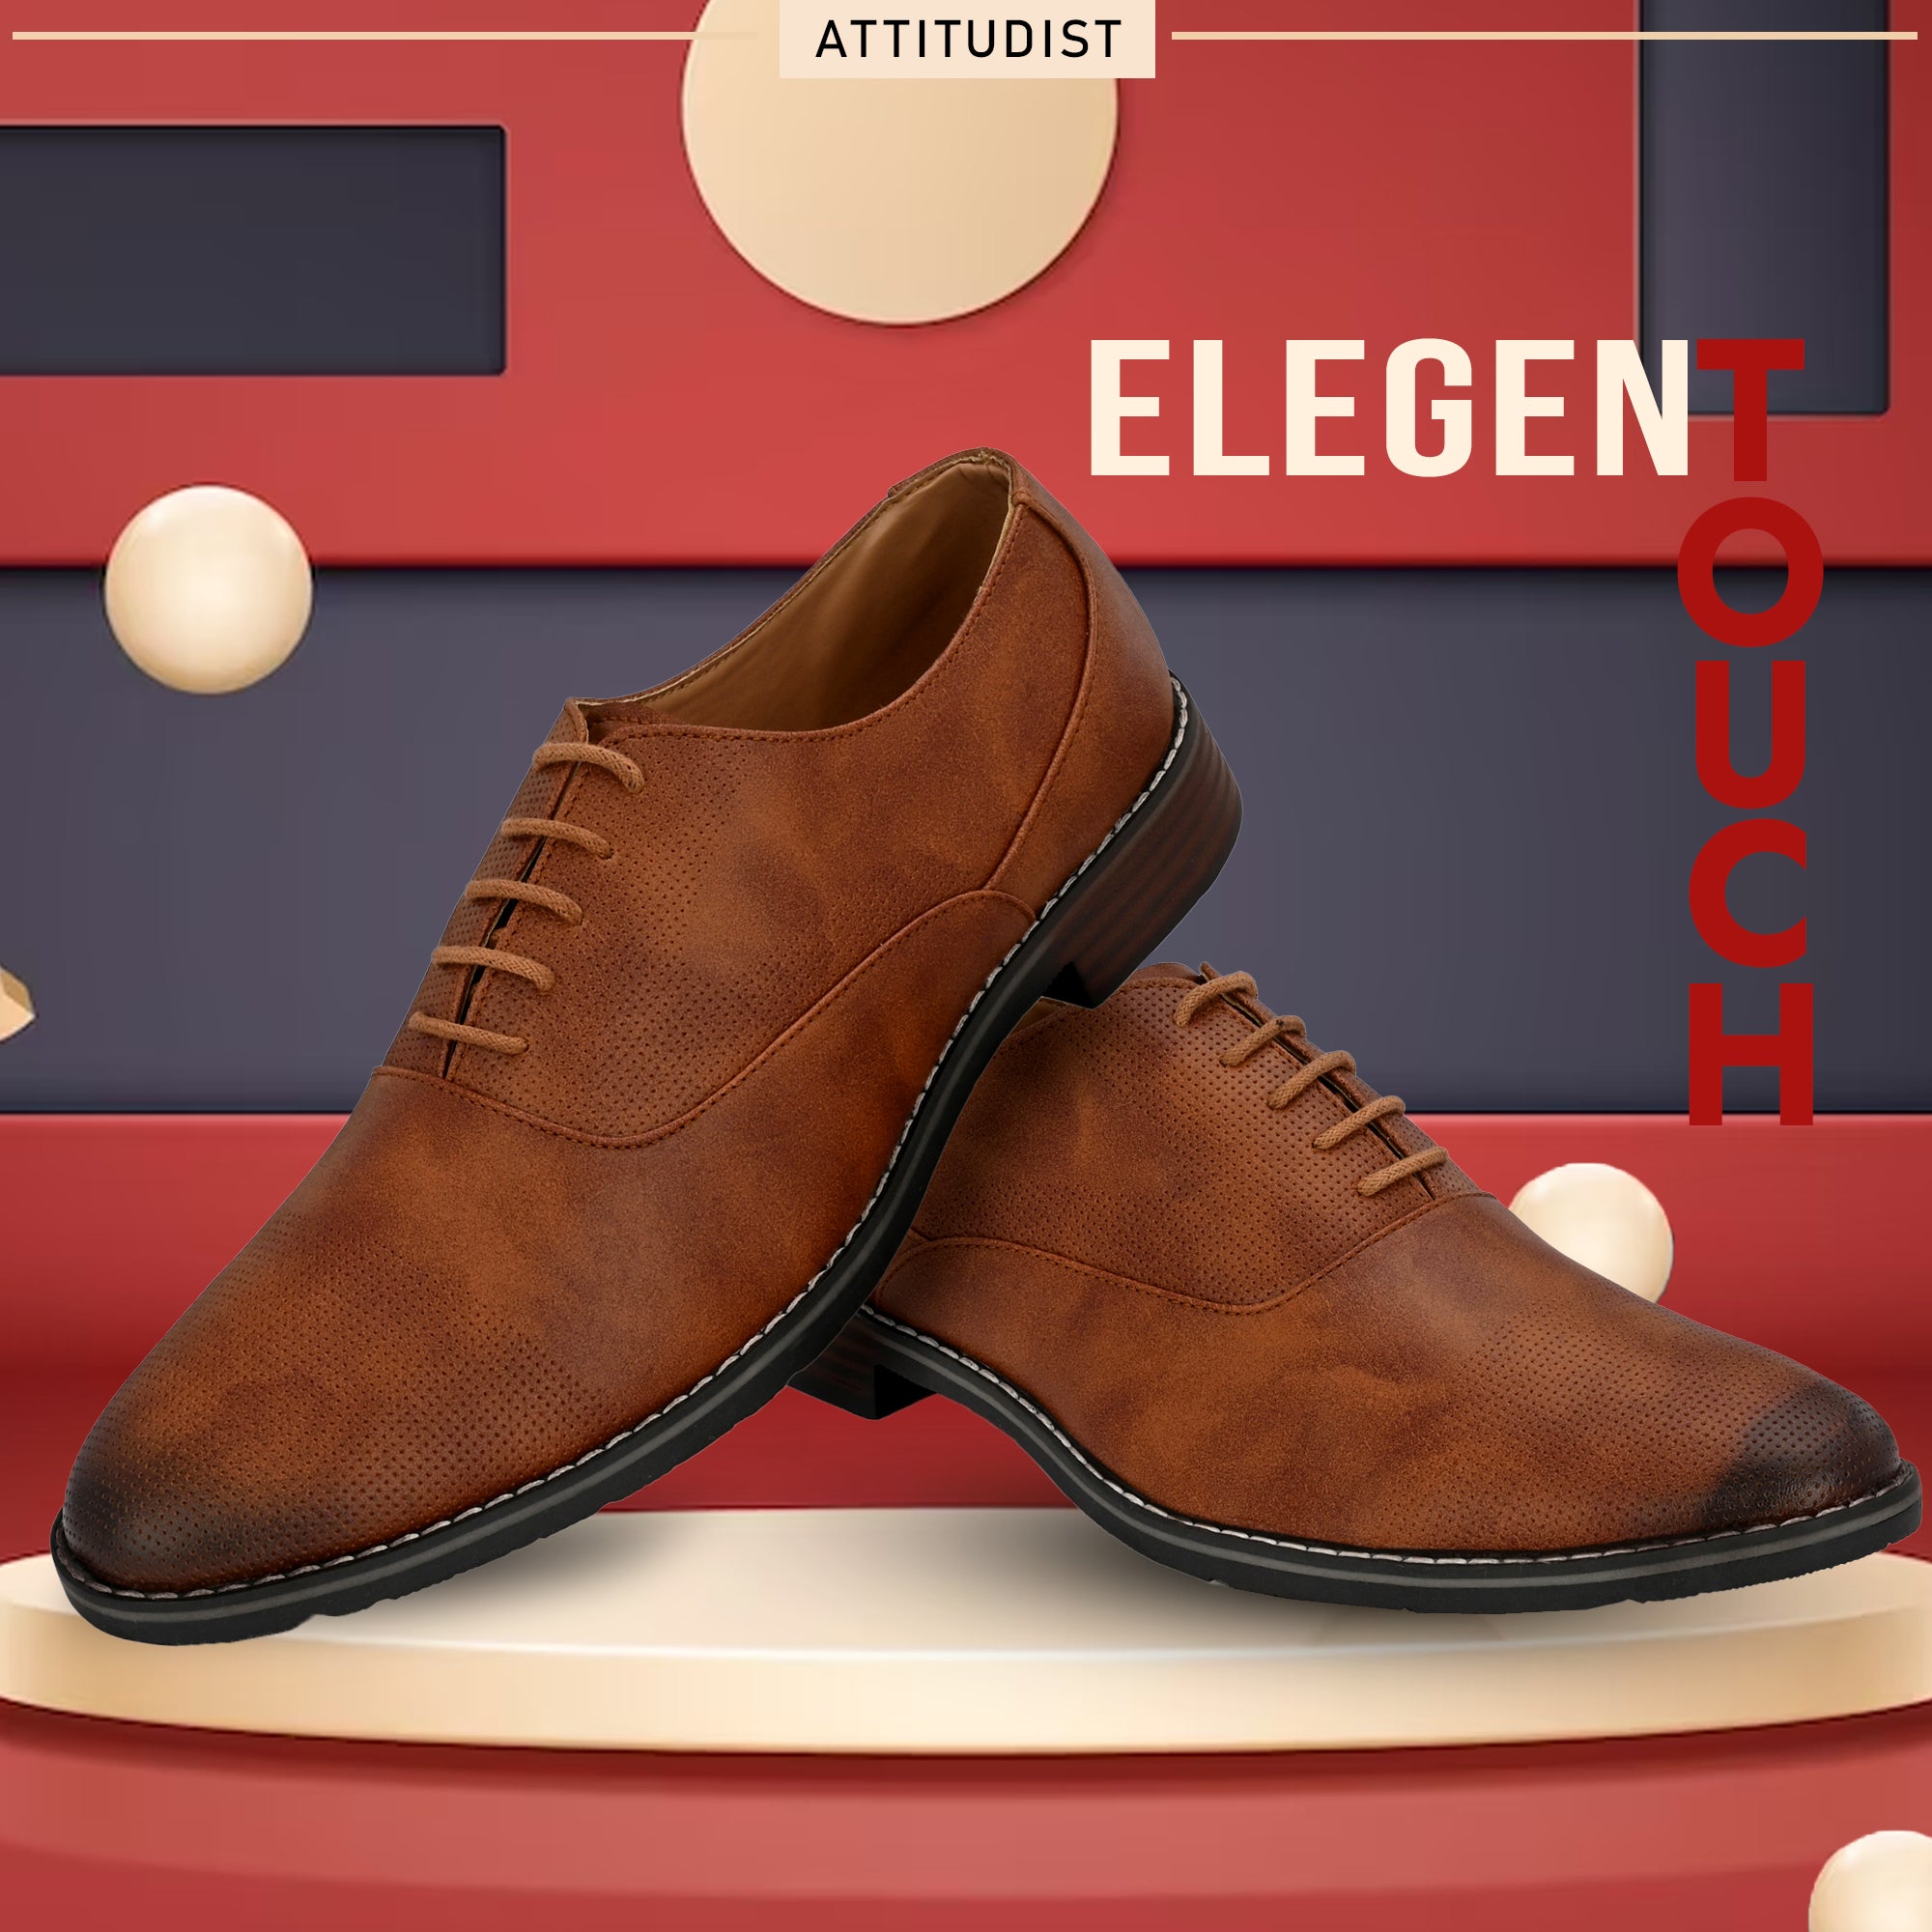 stylish-men-shoes-4006tan